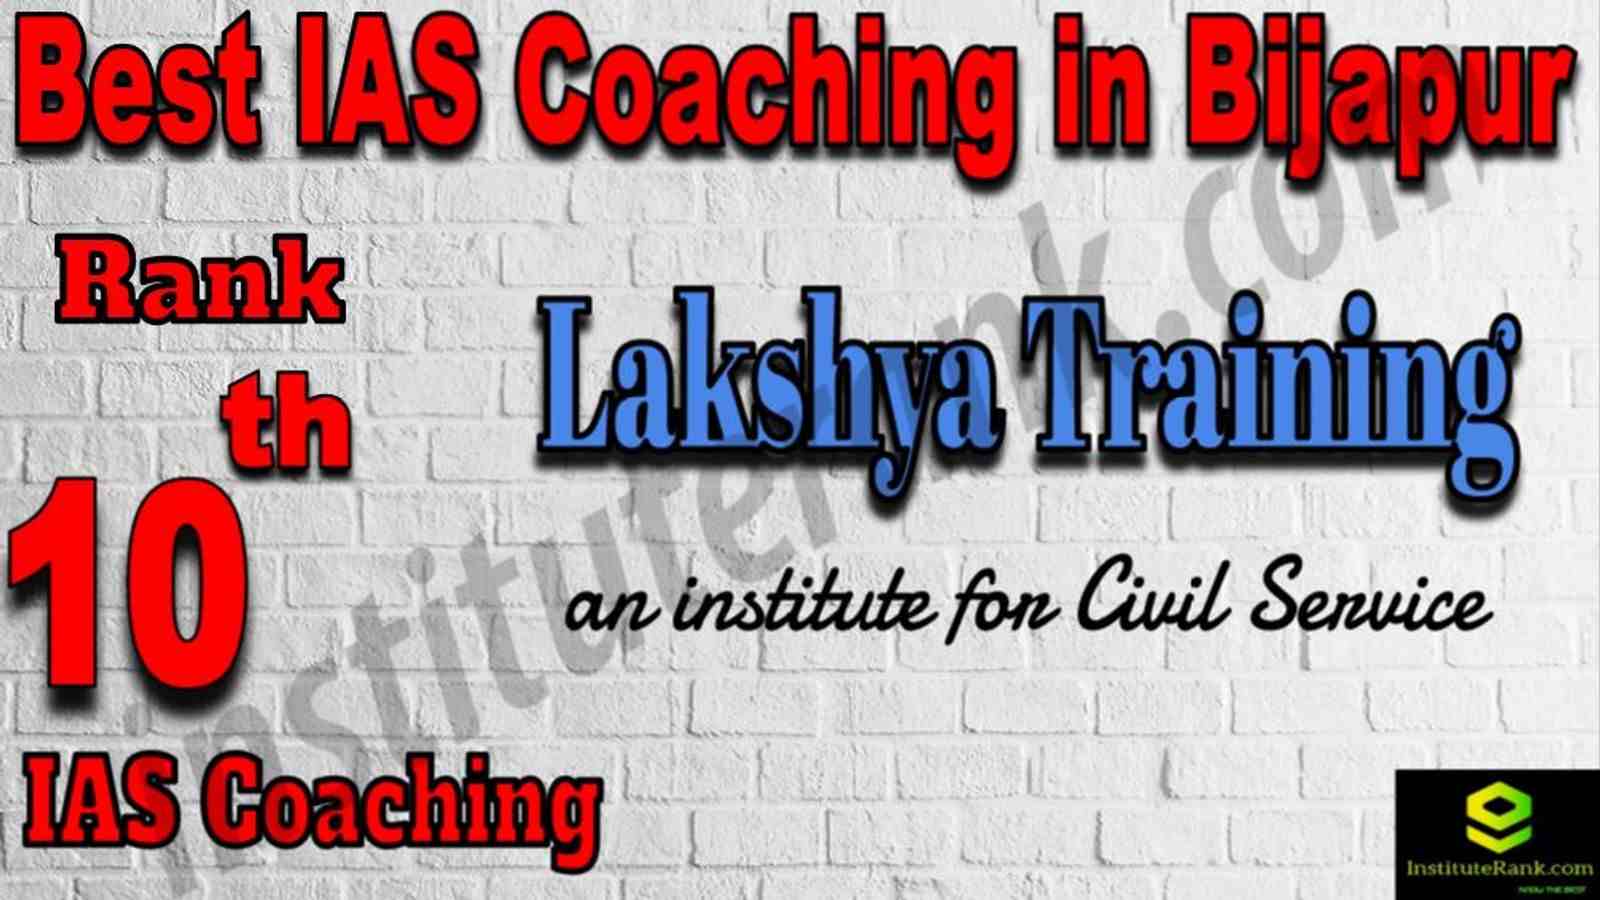 10th Best IAS Coaching in Bijapur